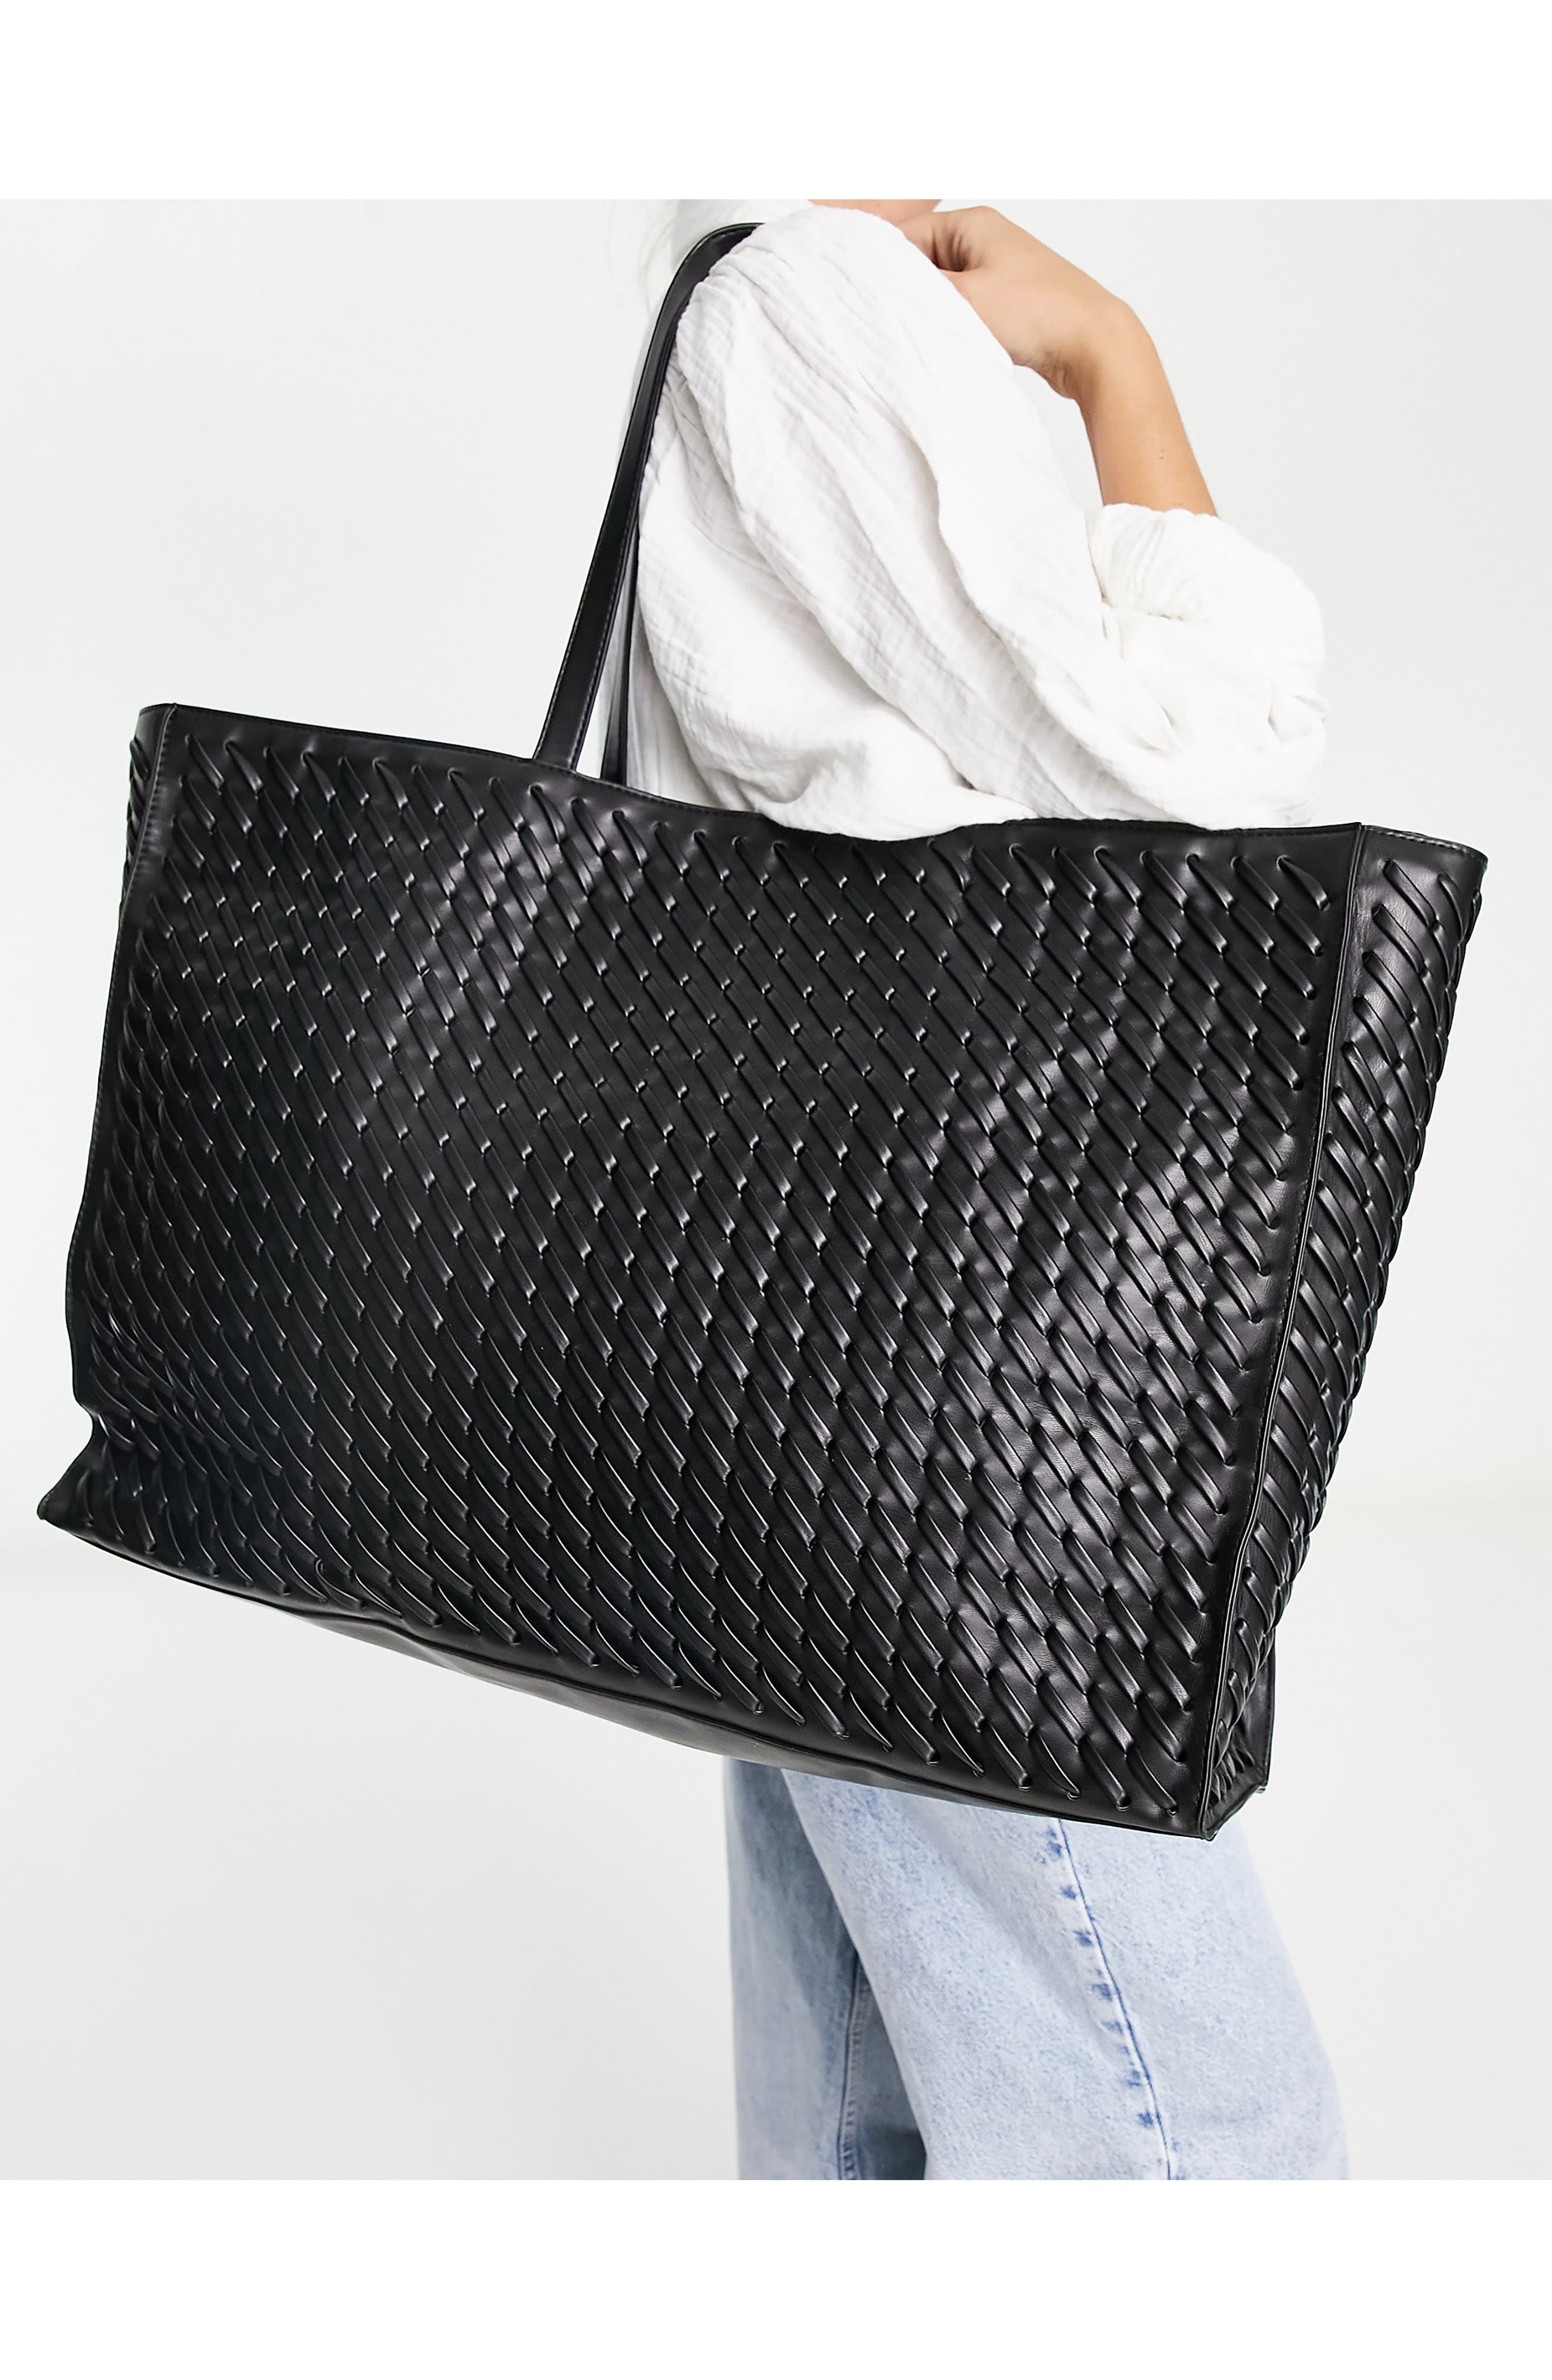 Women Fashion Zipper Tote Faux Patent Leather Handbag School Bag Lady Satchel 